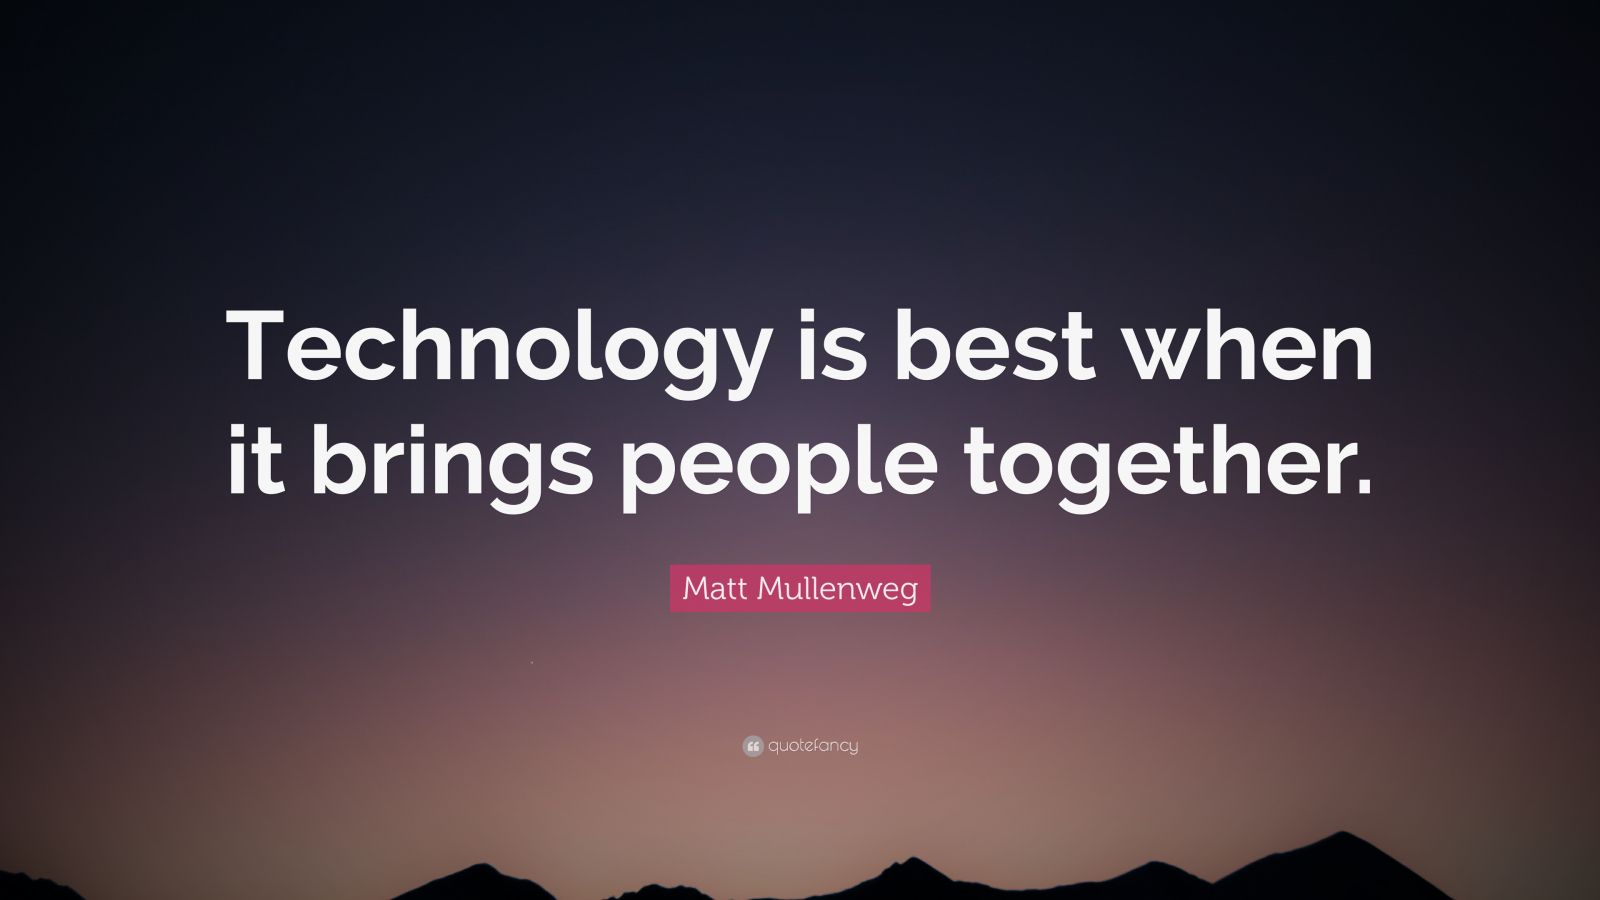 Matt Mullenweg Quote: “Technology is best when it brings people ...